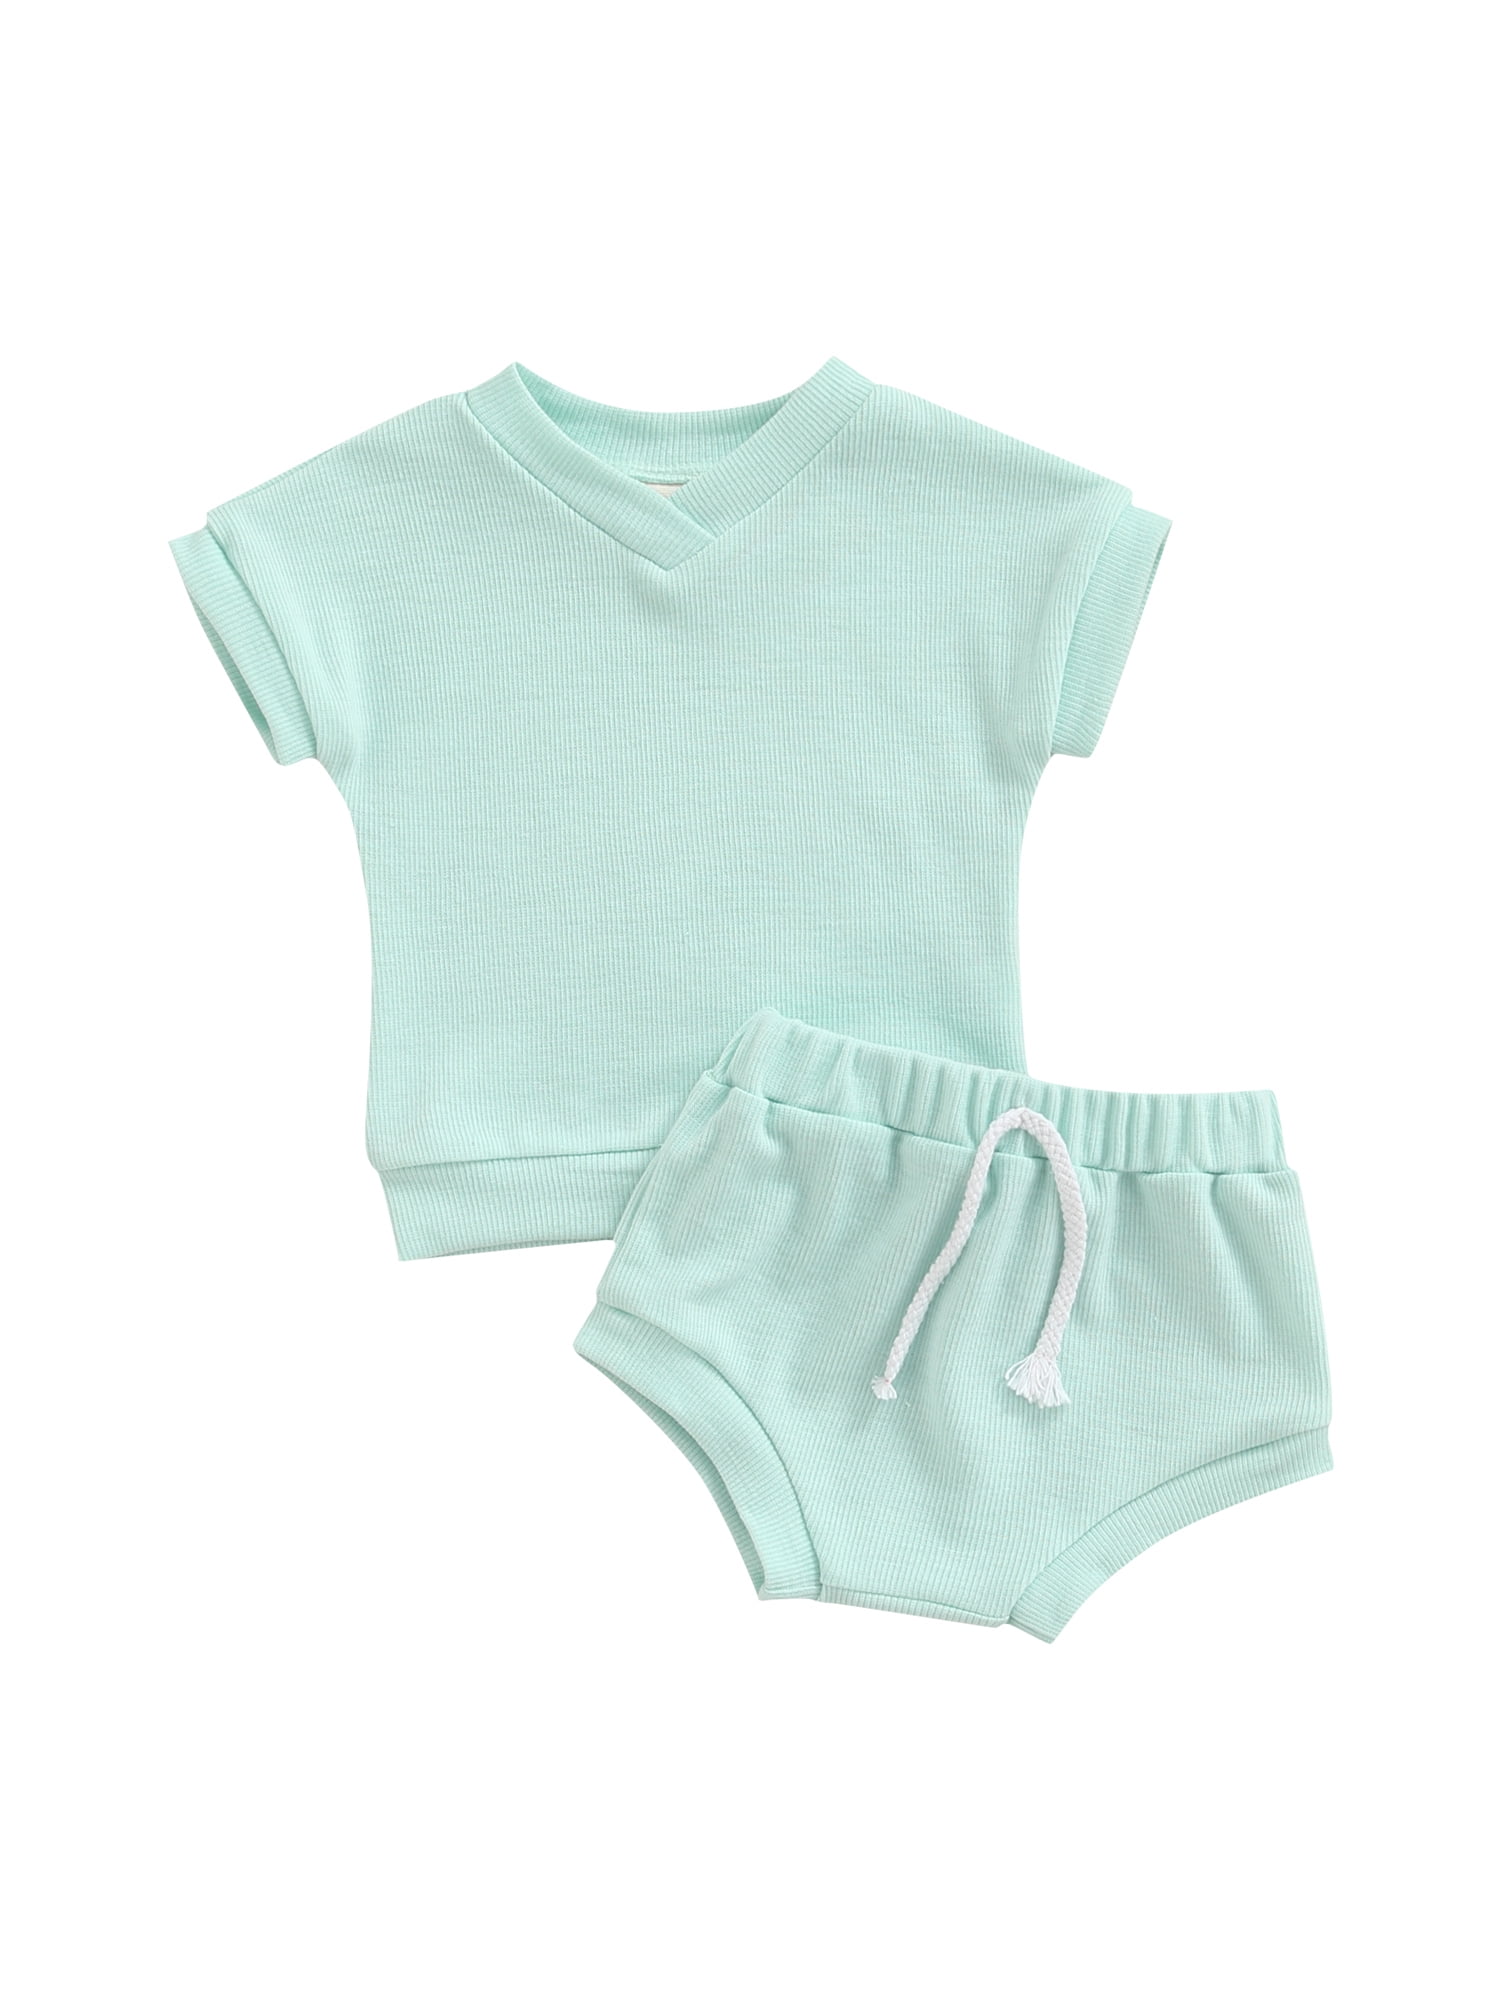 Drawstring Shorts Casual Summer Clothes Set 2Pcs/Set Newborn Baby Girls Boys Short Sleeve T-Shirt Top